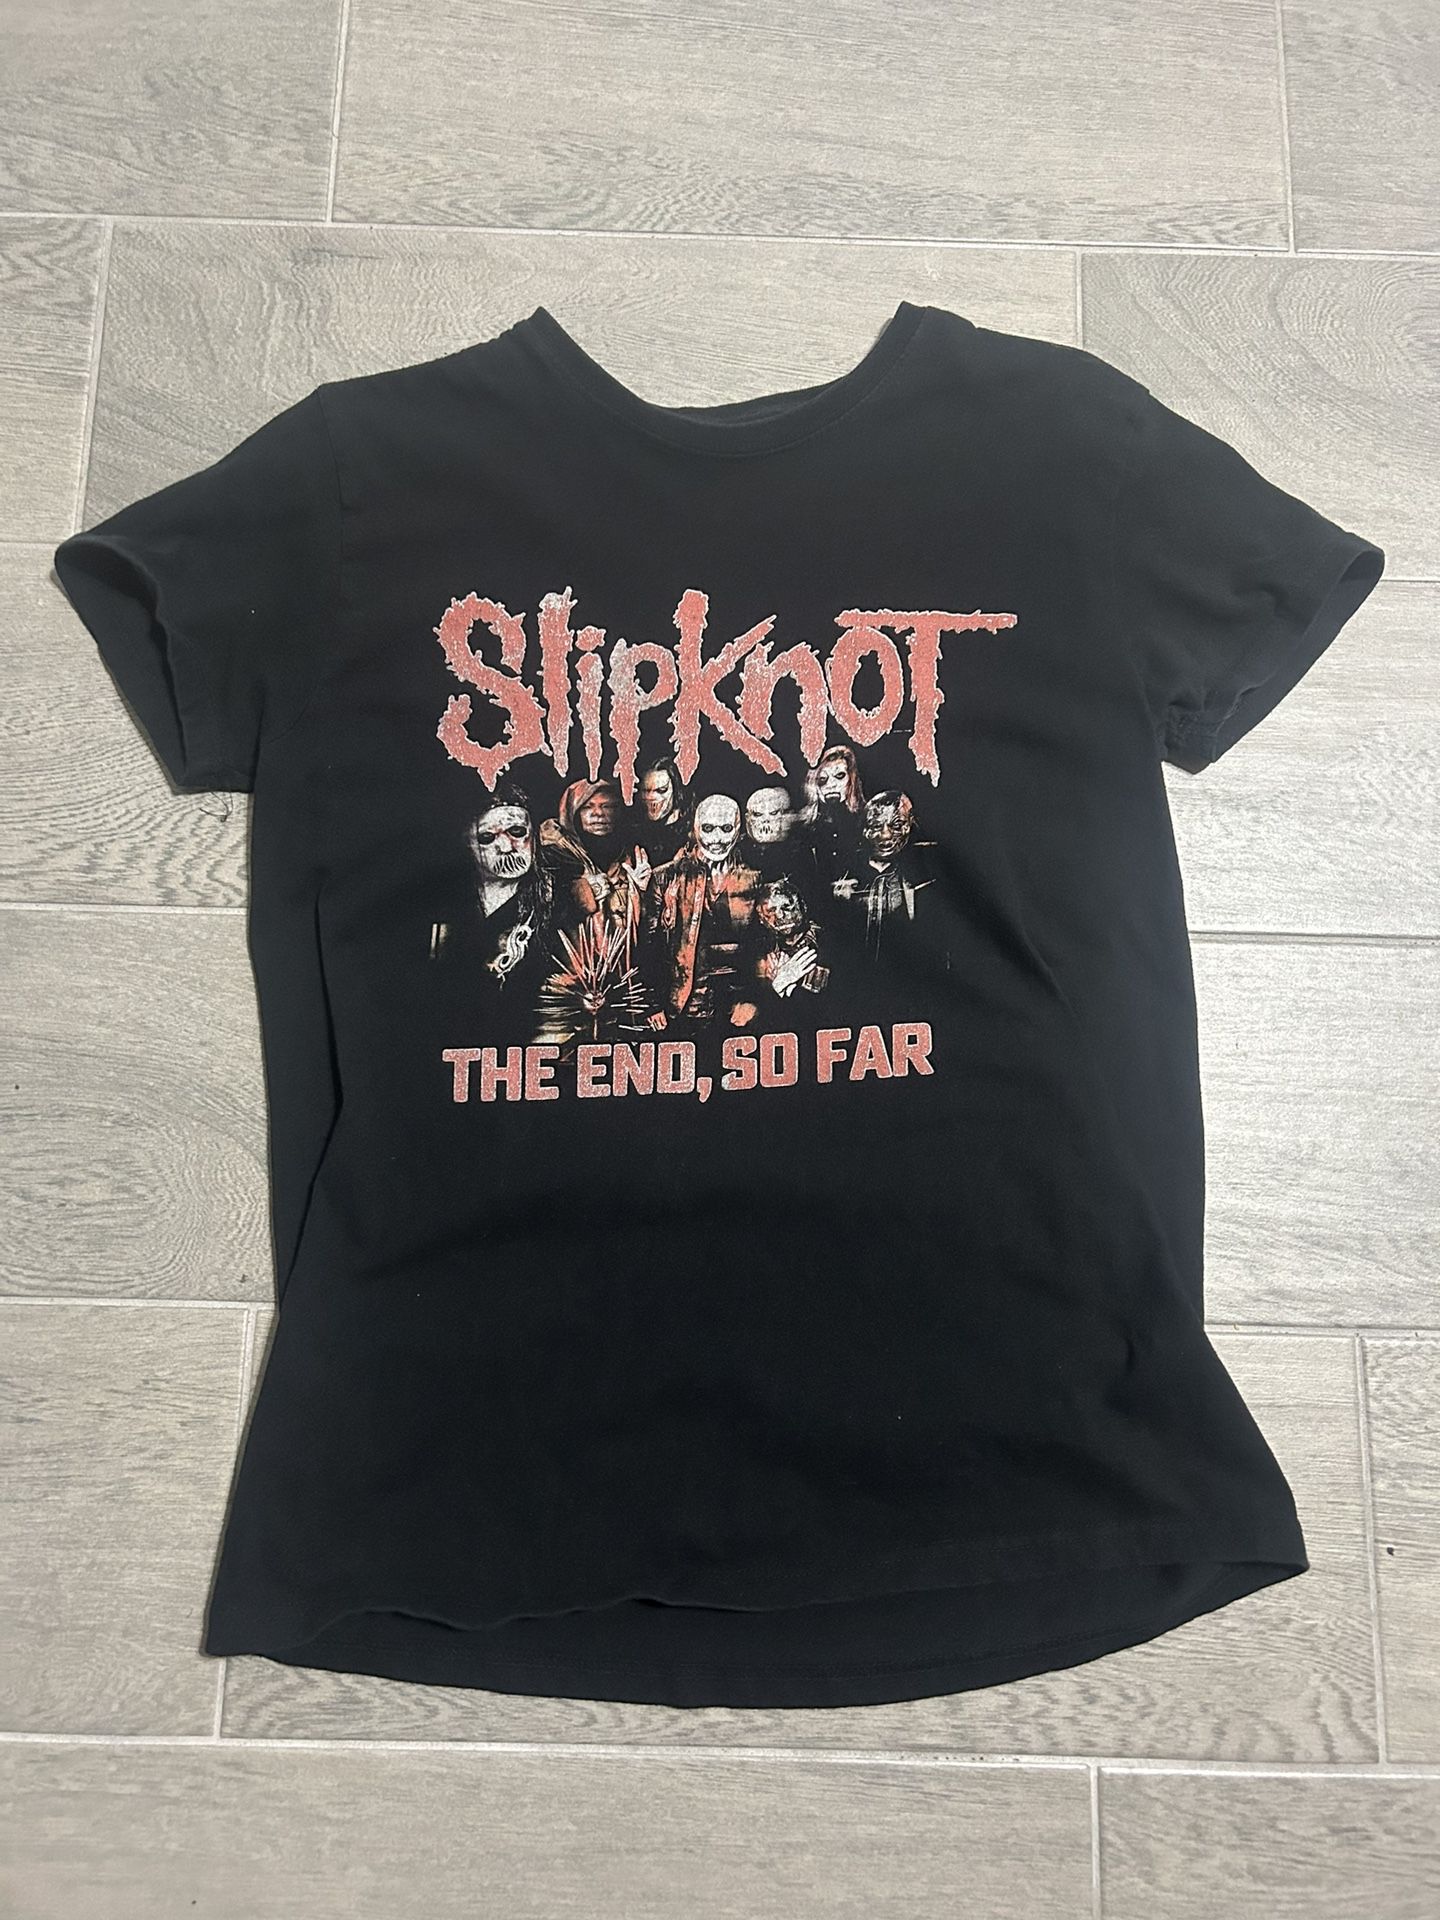 Vintage Slipknot T-Shirt 